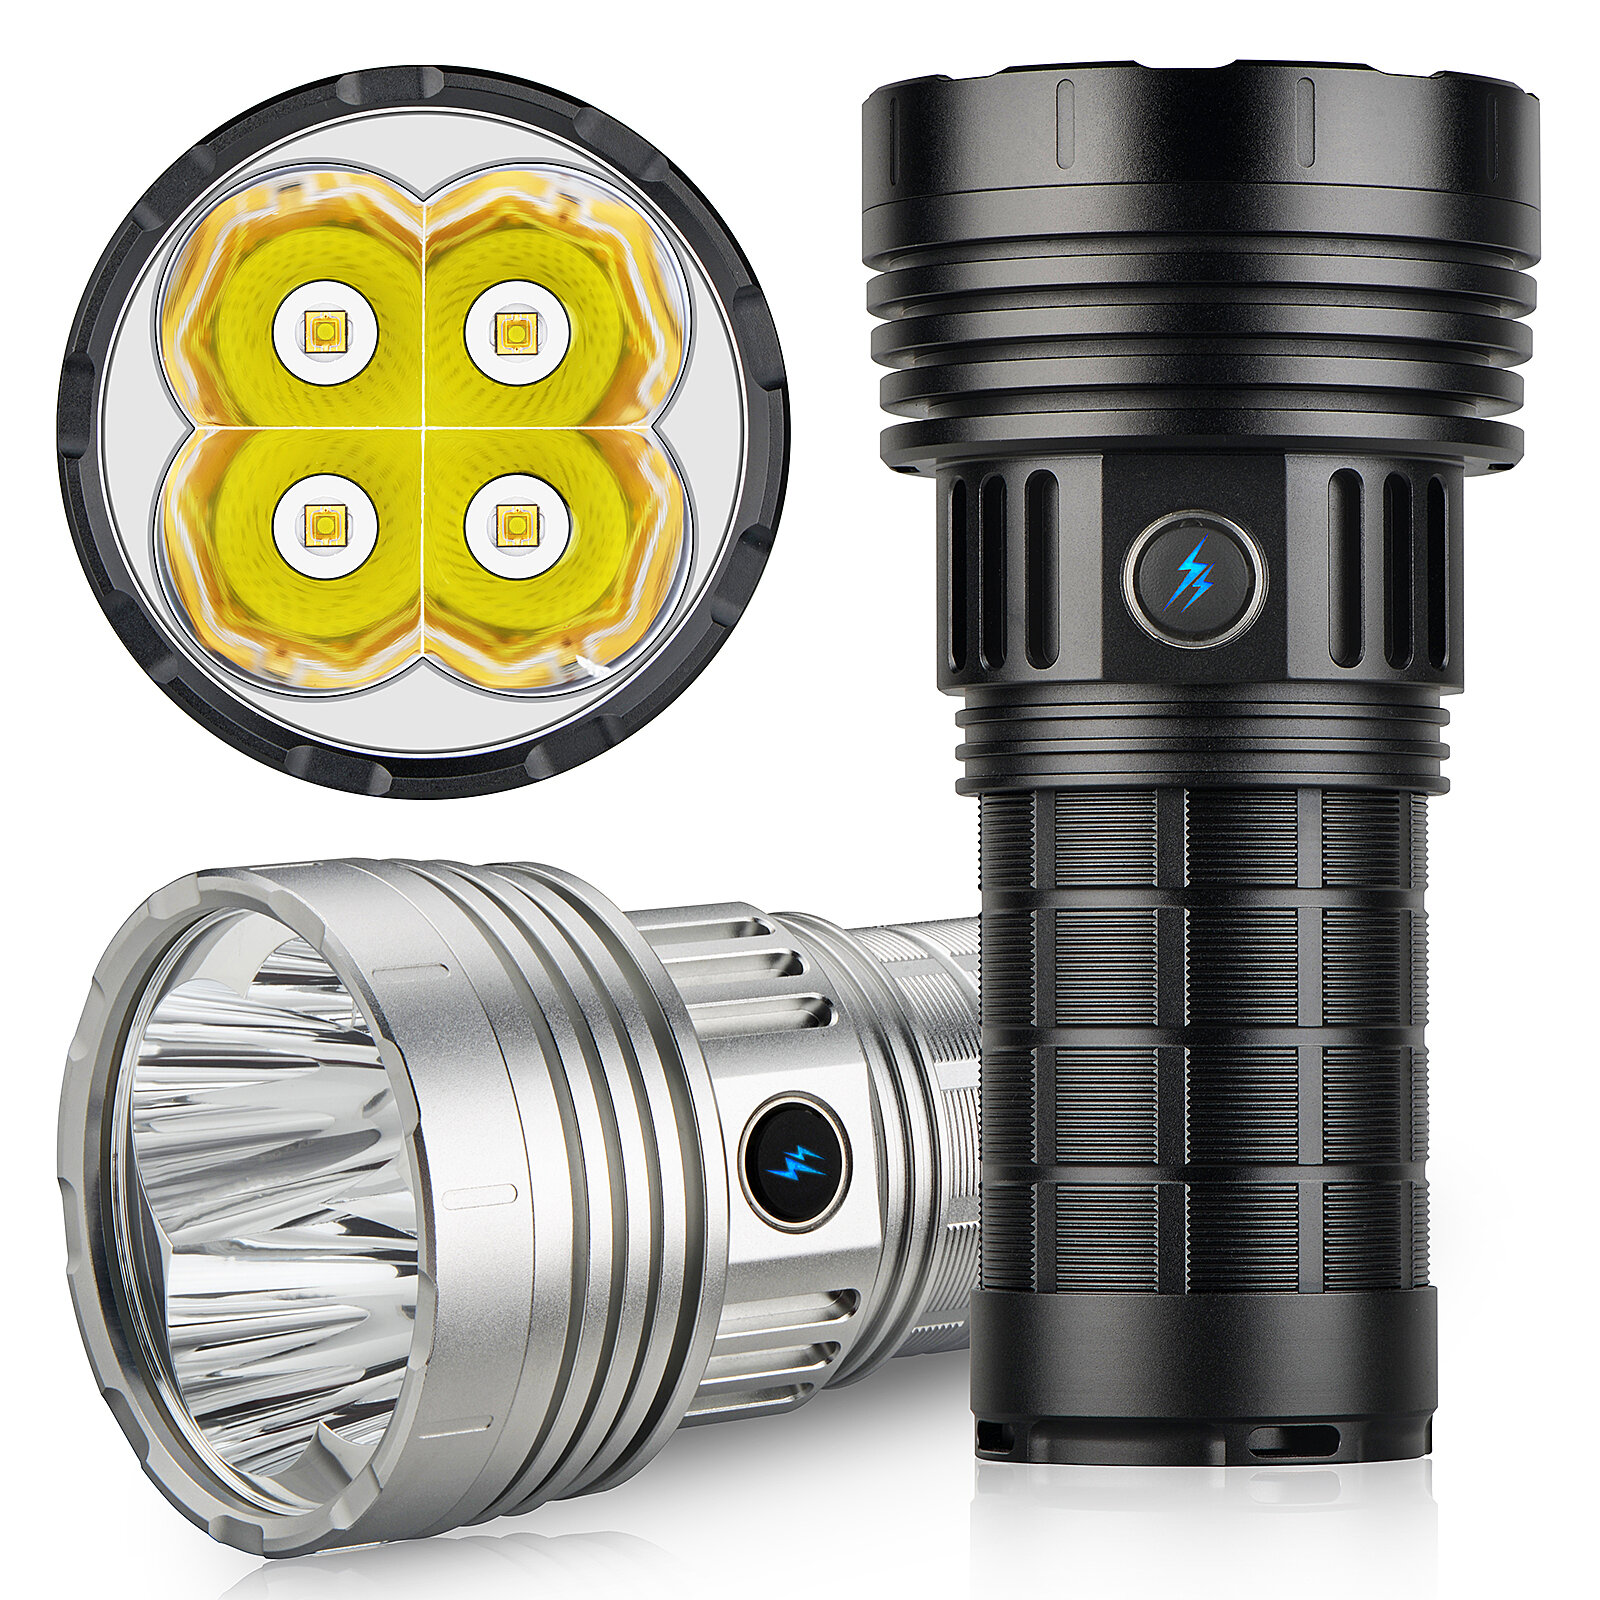 

HAIKELITE HG50 4*G50 LED Мощный фонарь 21700 Type-C Мощный перезаряжаемый портативный фонарь LED Фонарик для На открытом